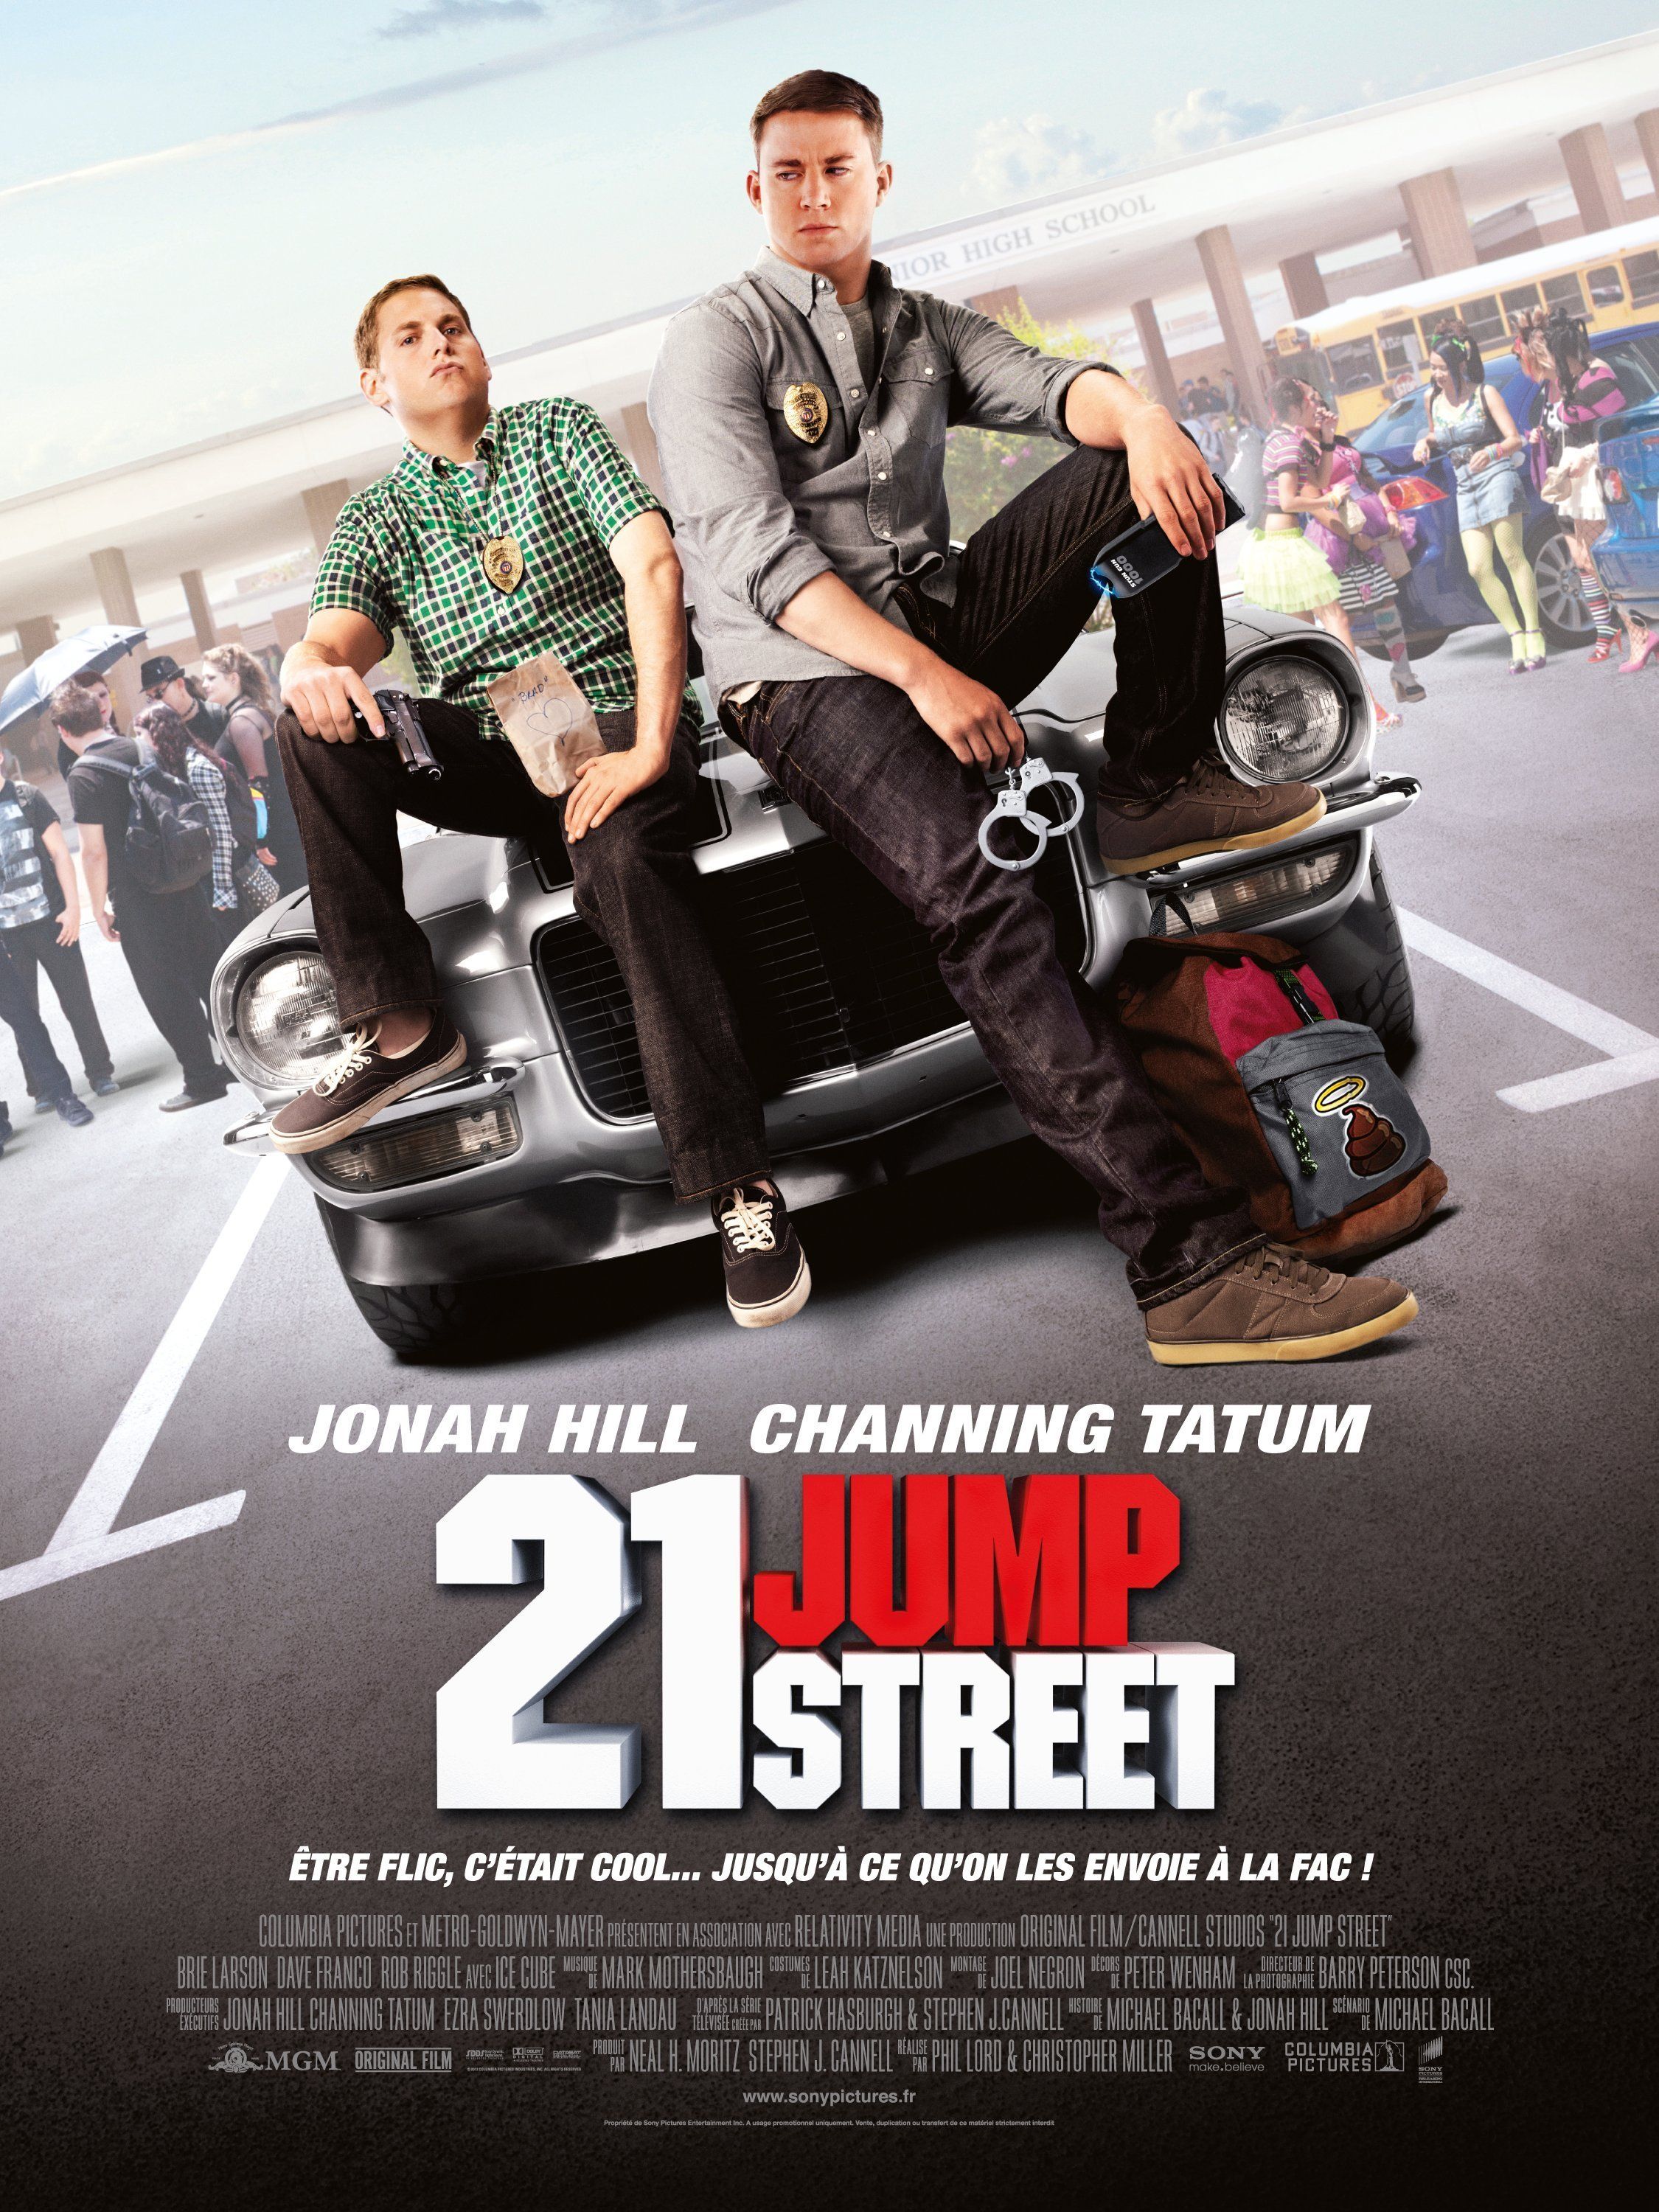 21 jump street 2